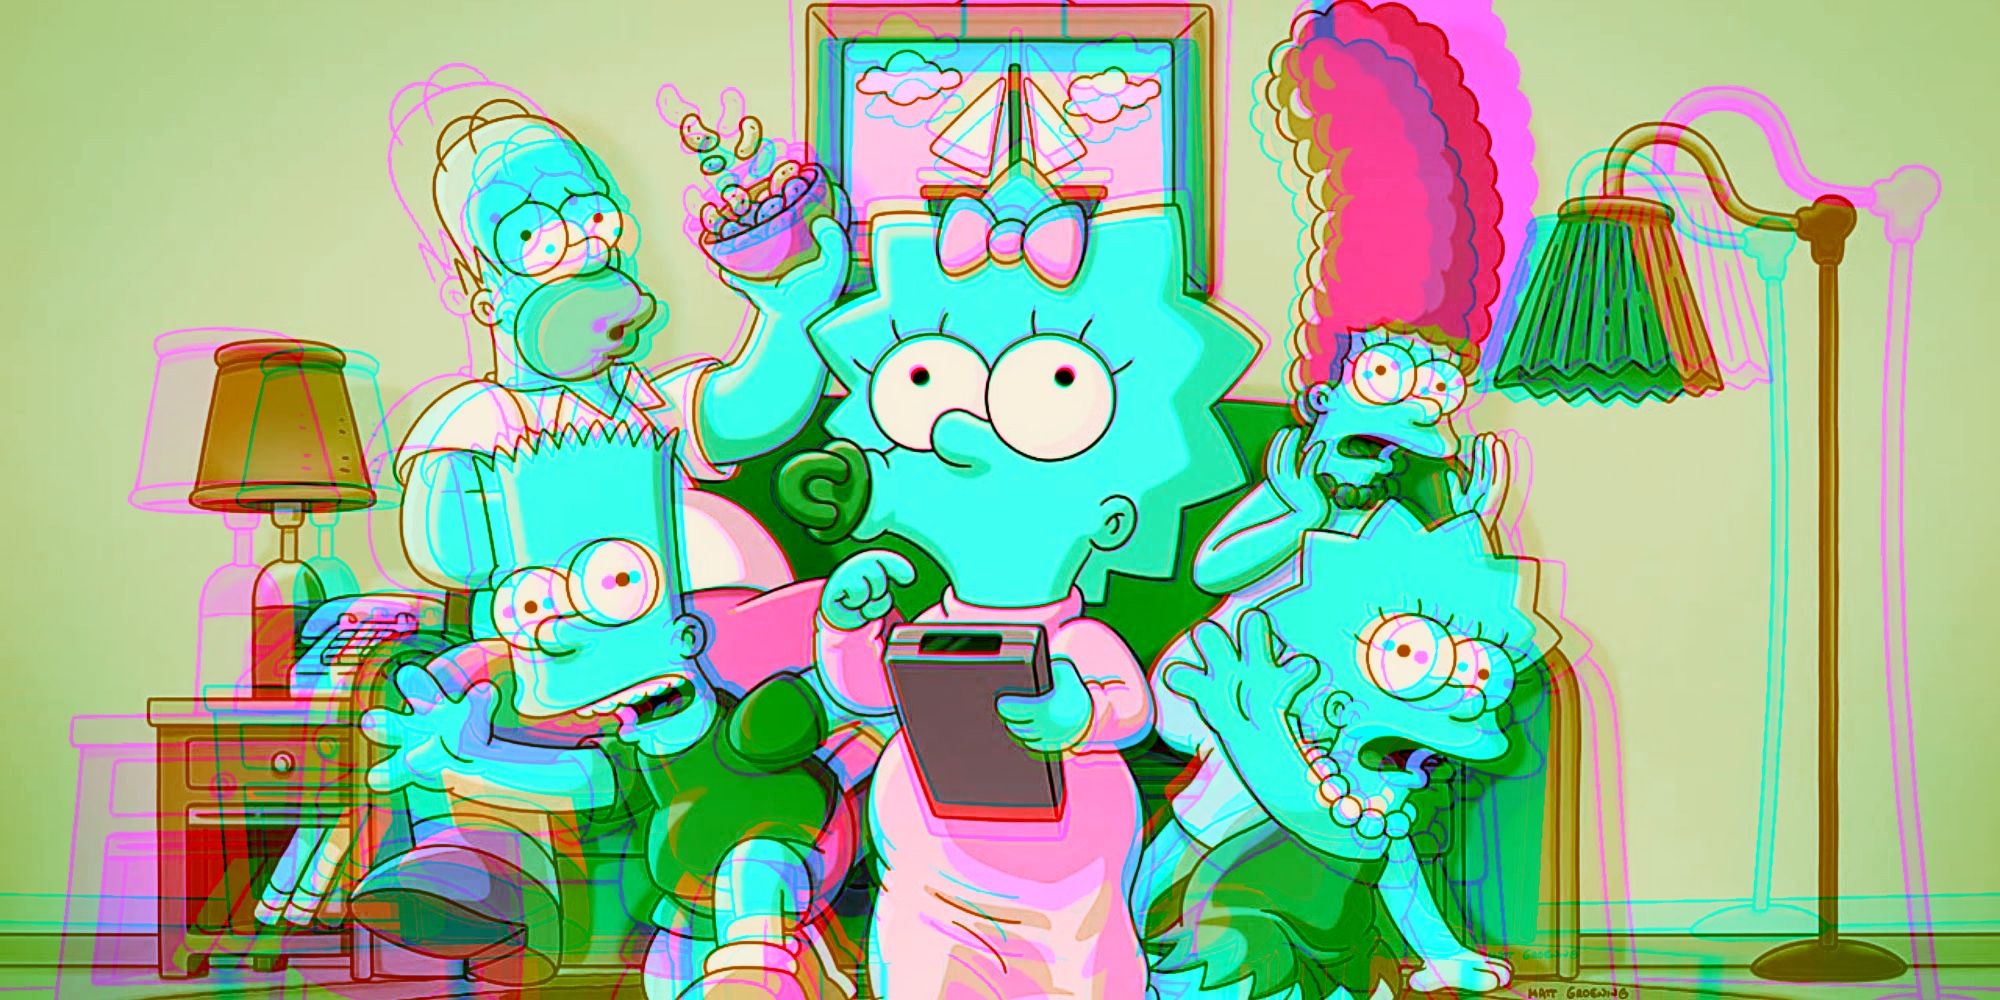 The Simpsons (season 34) - Wikipedia